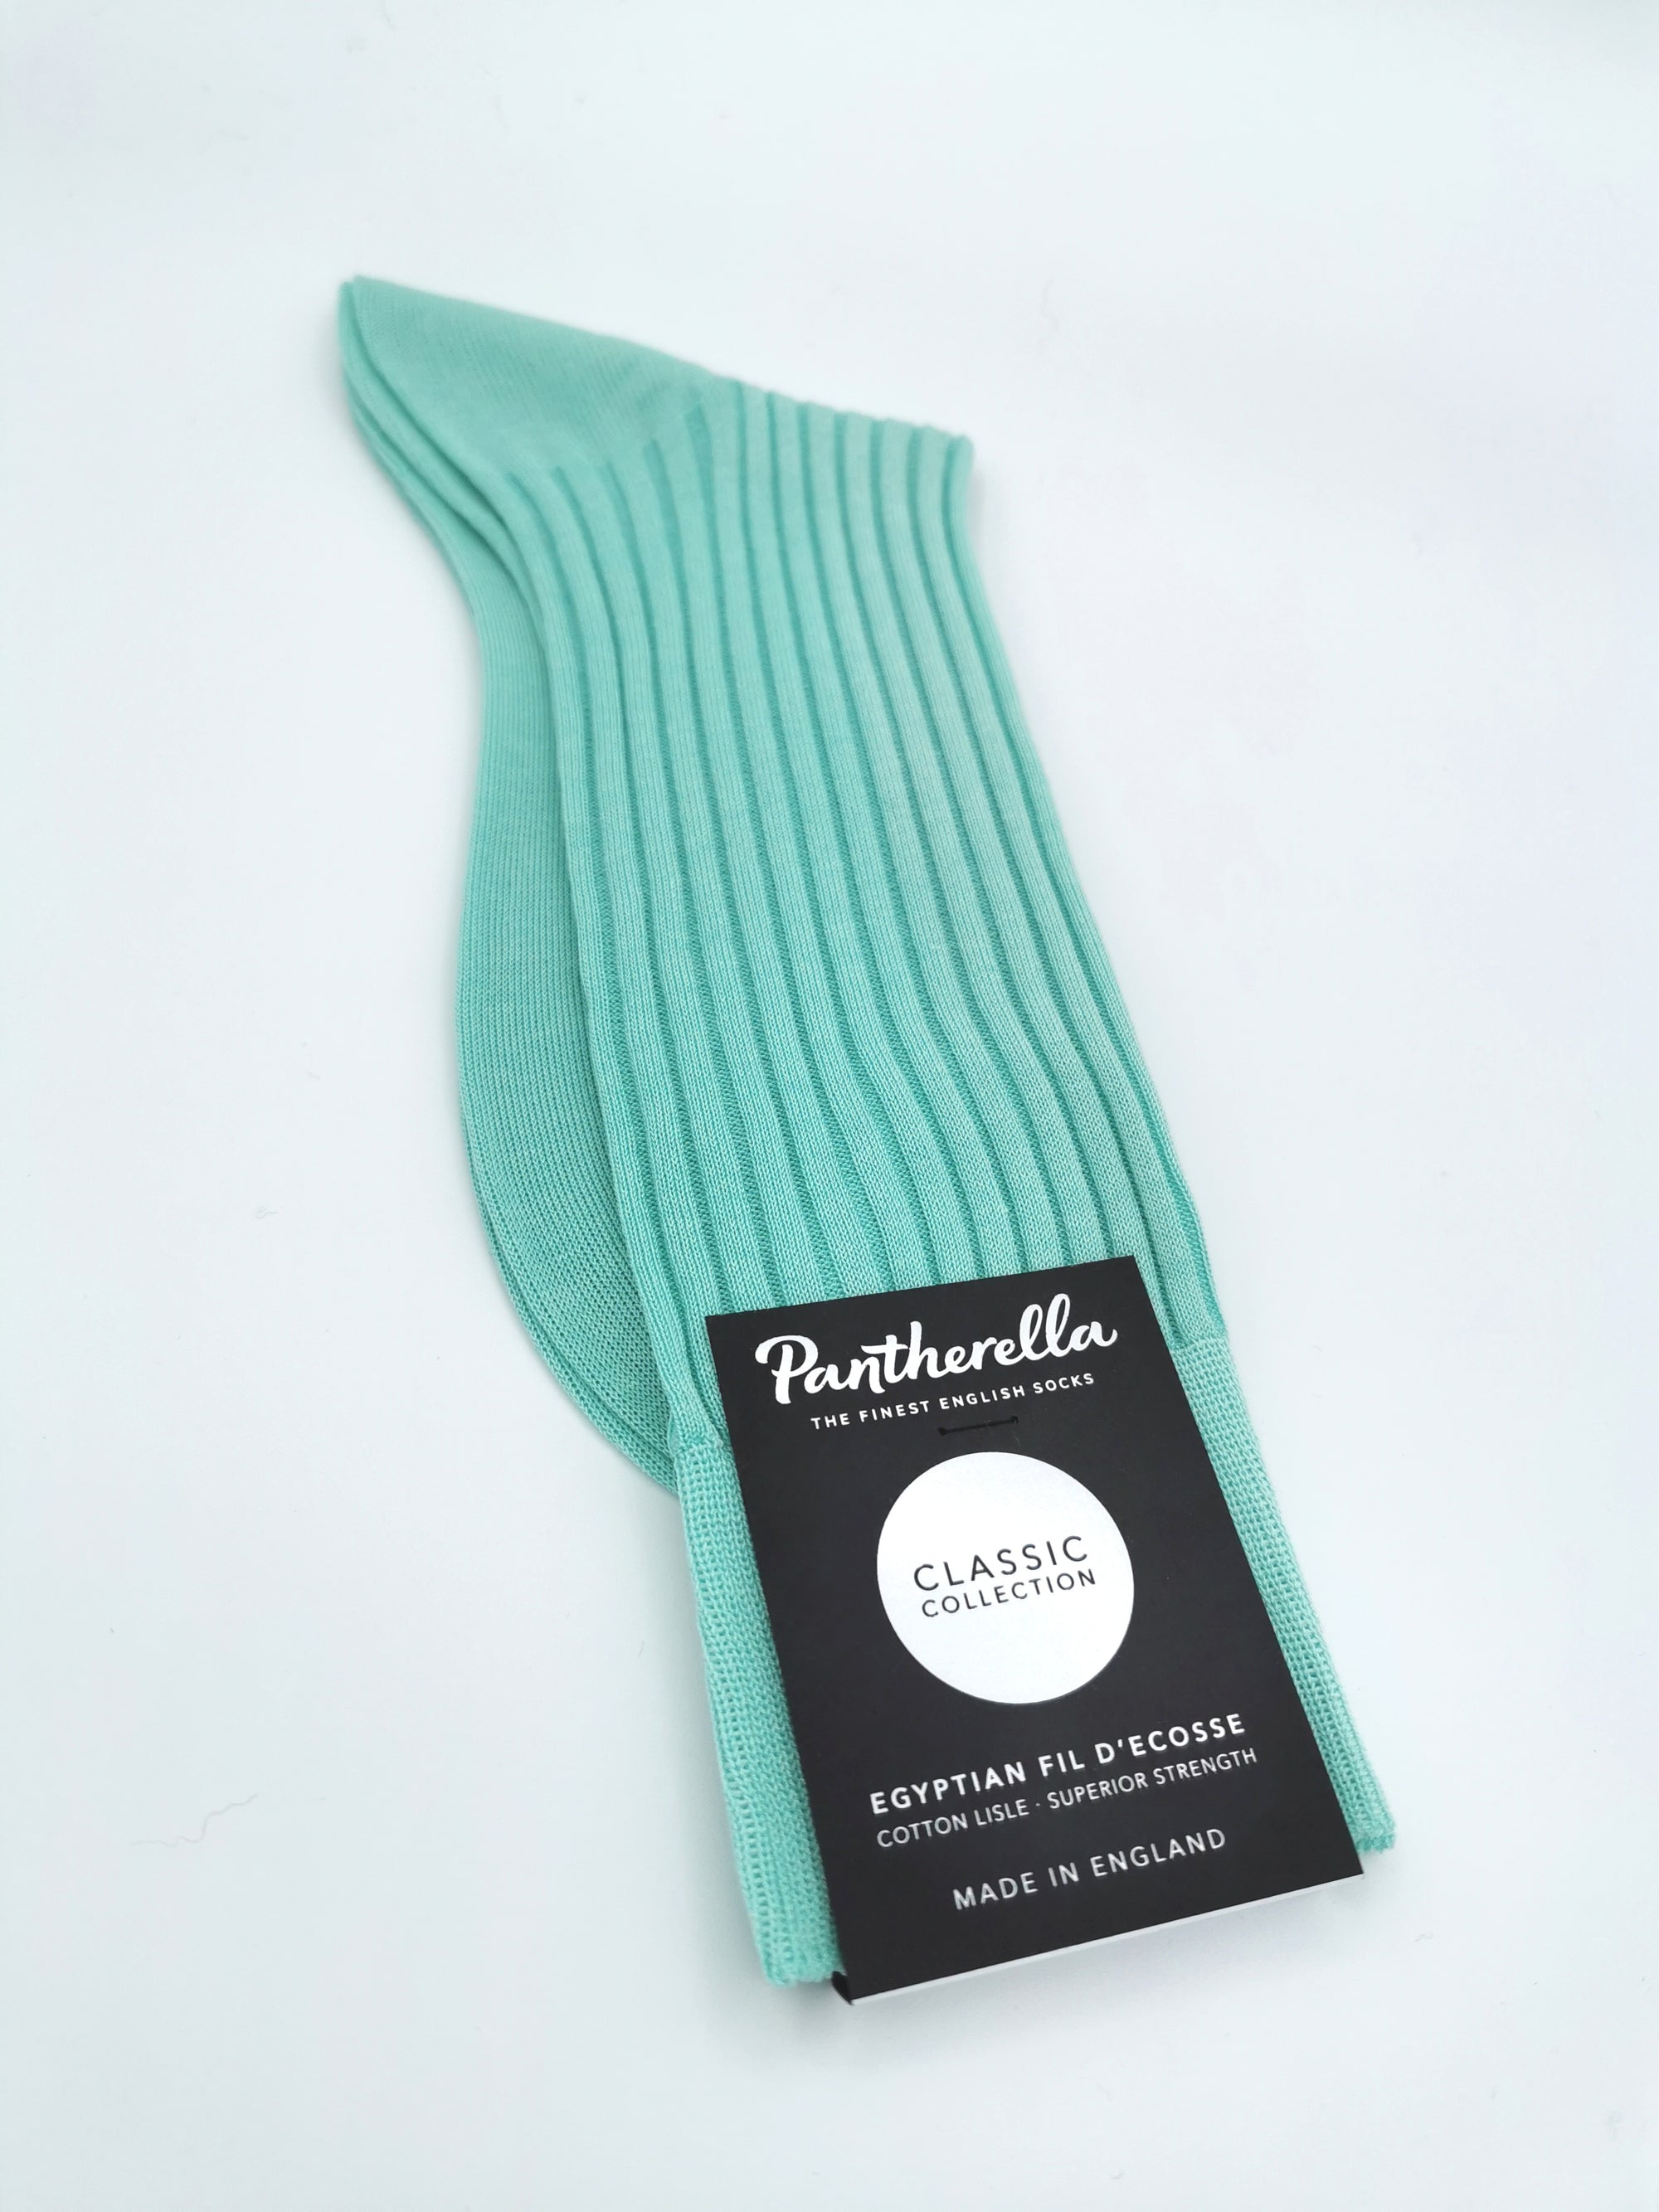 Mint Lisle Pantherella socks